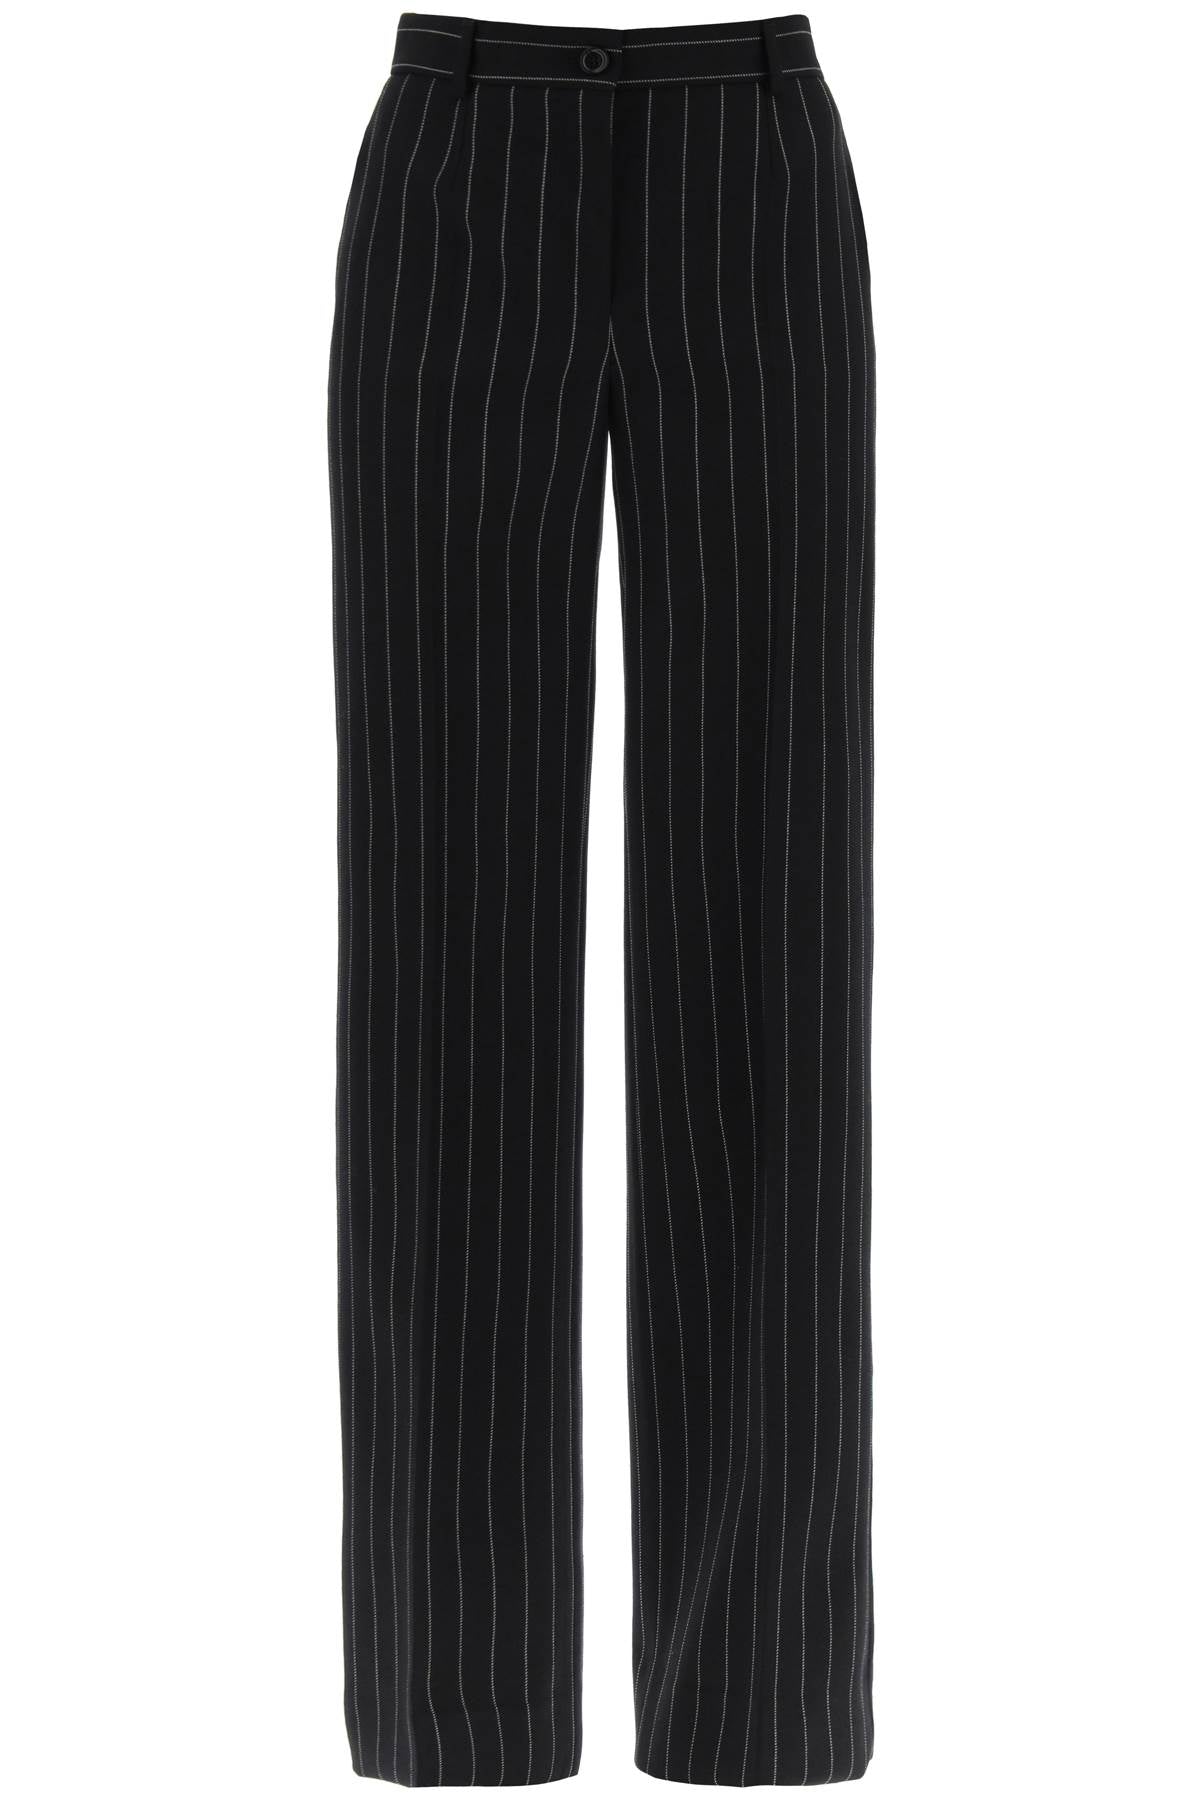 Dolce & gabbana striped flare leg pants-0